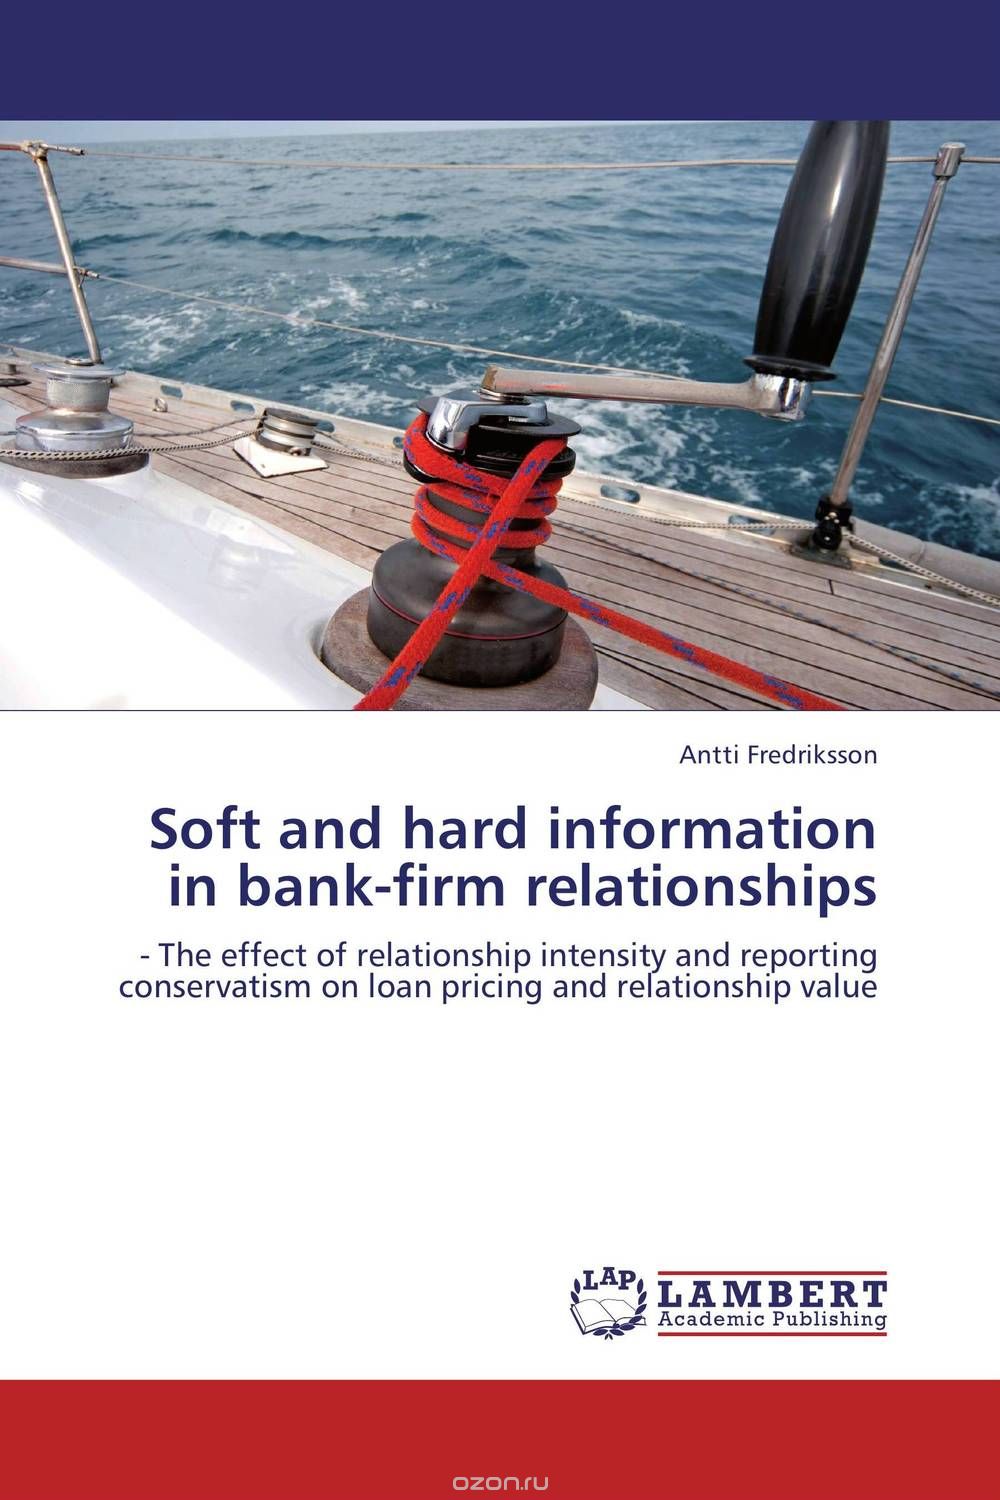 Скачать книгу "Soft and hard information in bank-firm relationships"